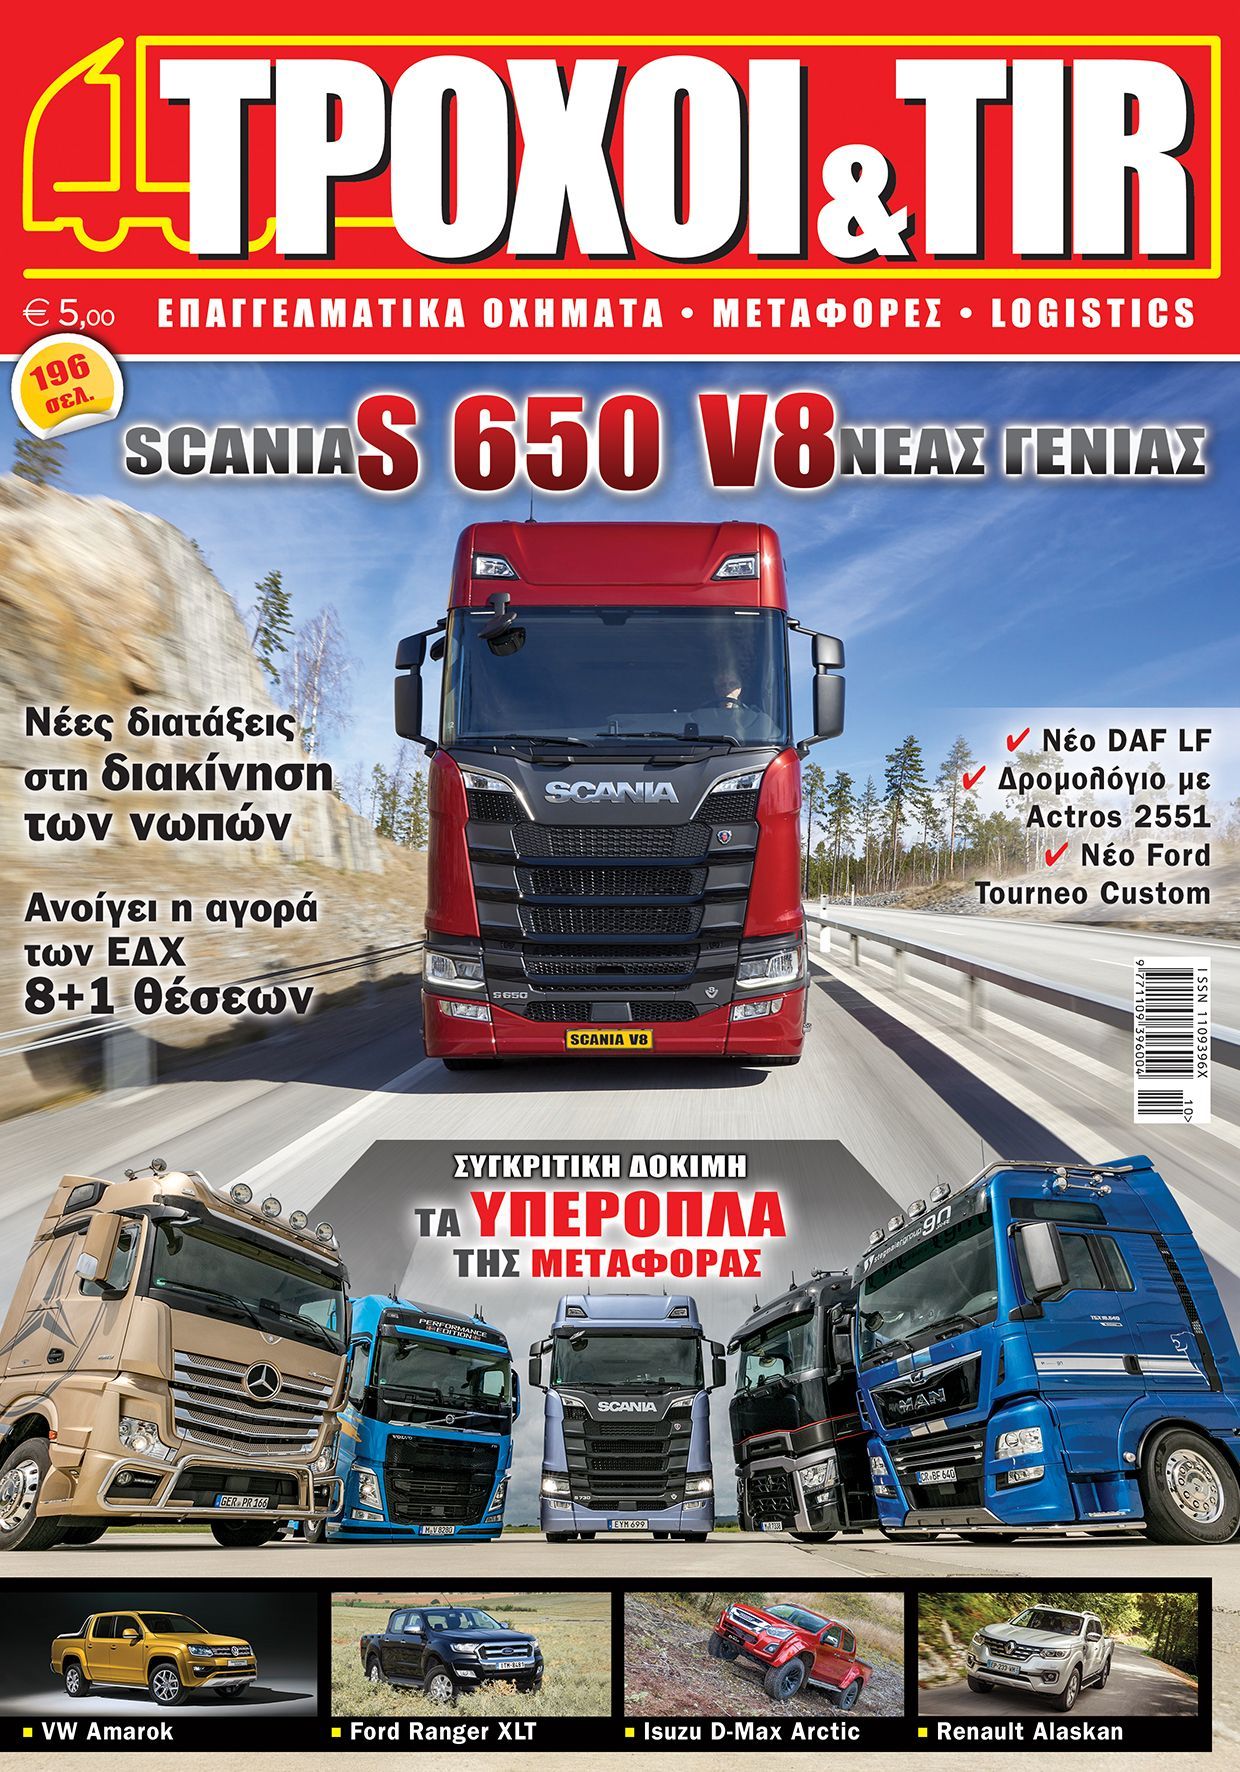 Troxoikaitir issue 354 october 2017 cover